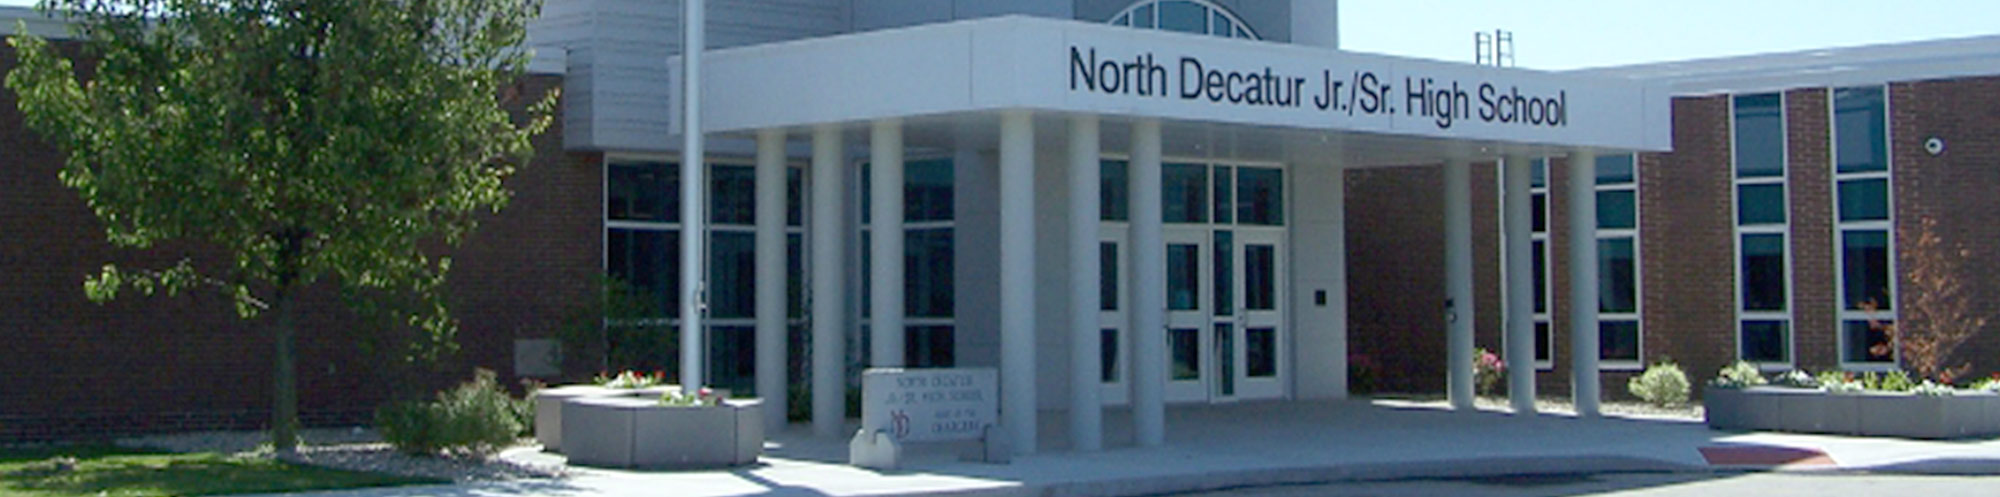 North Decatur Jr./Sr. High